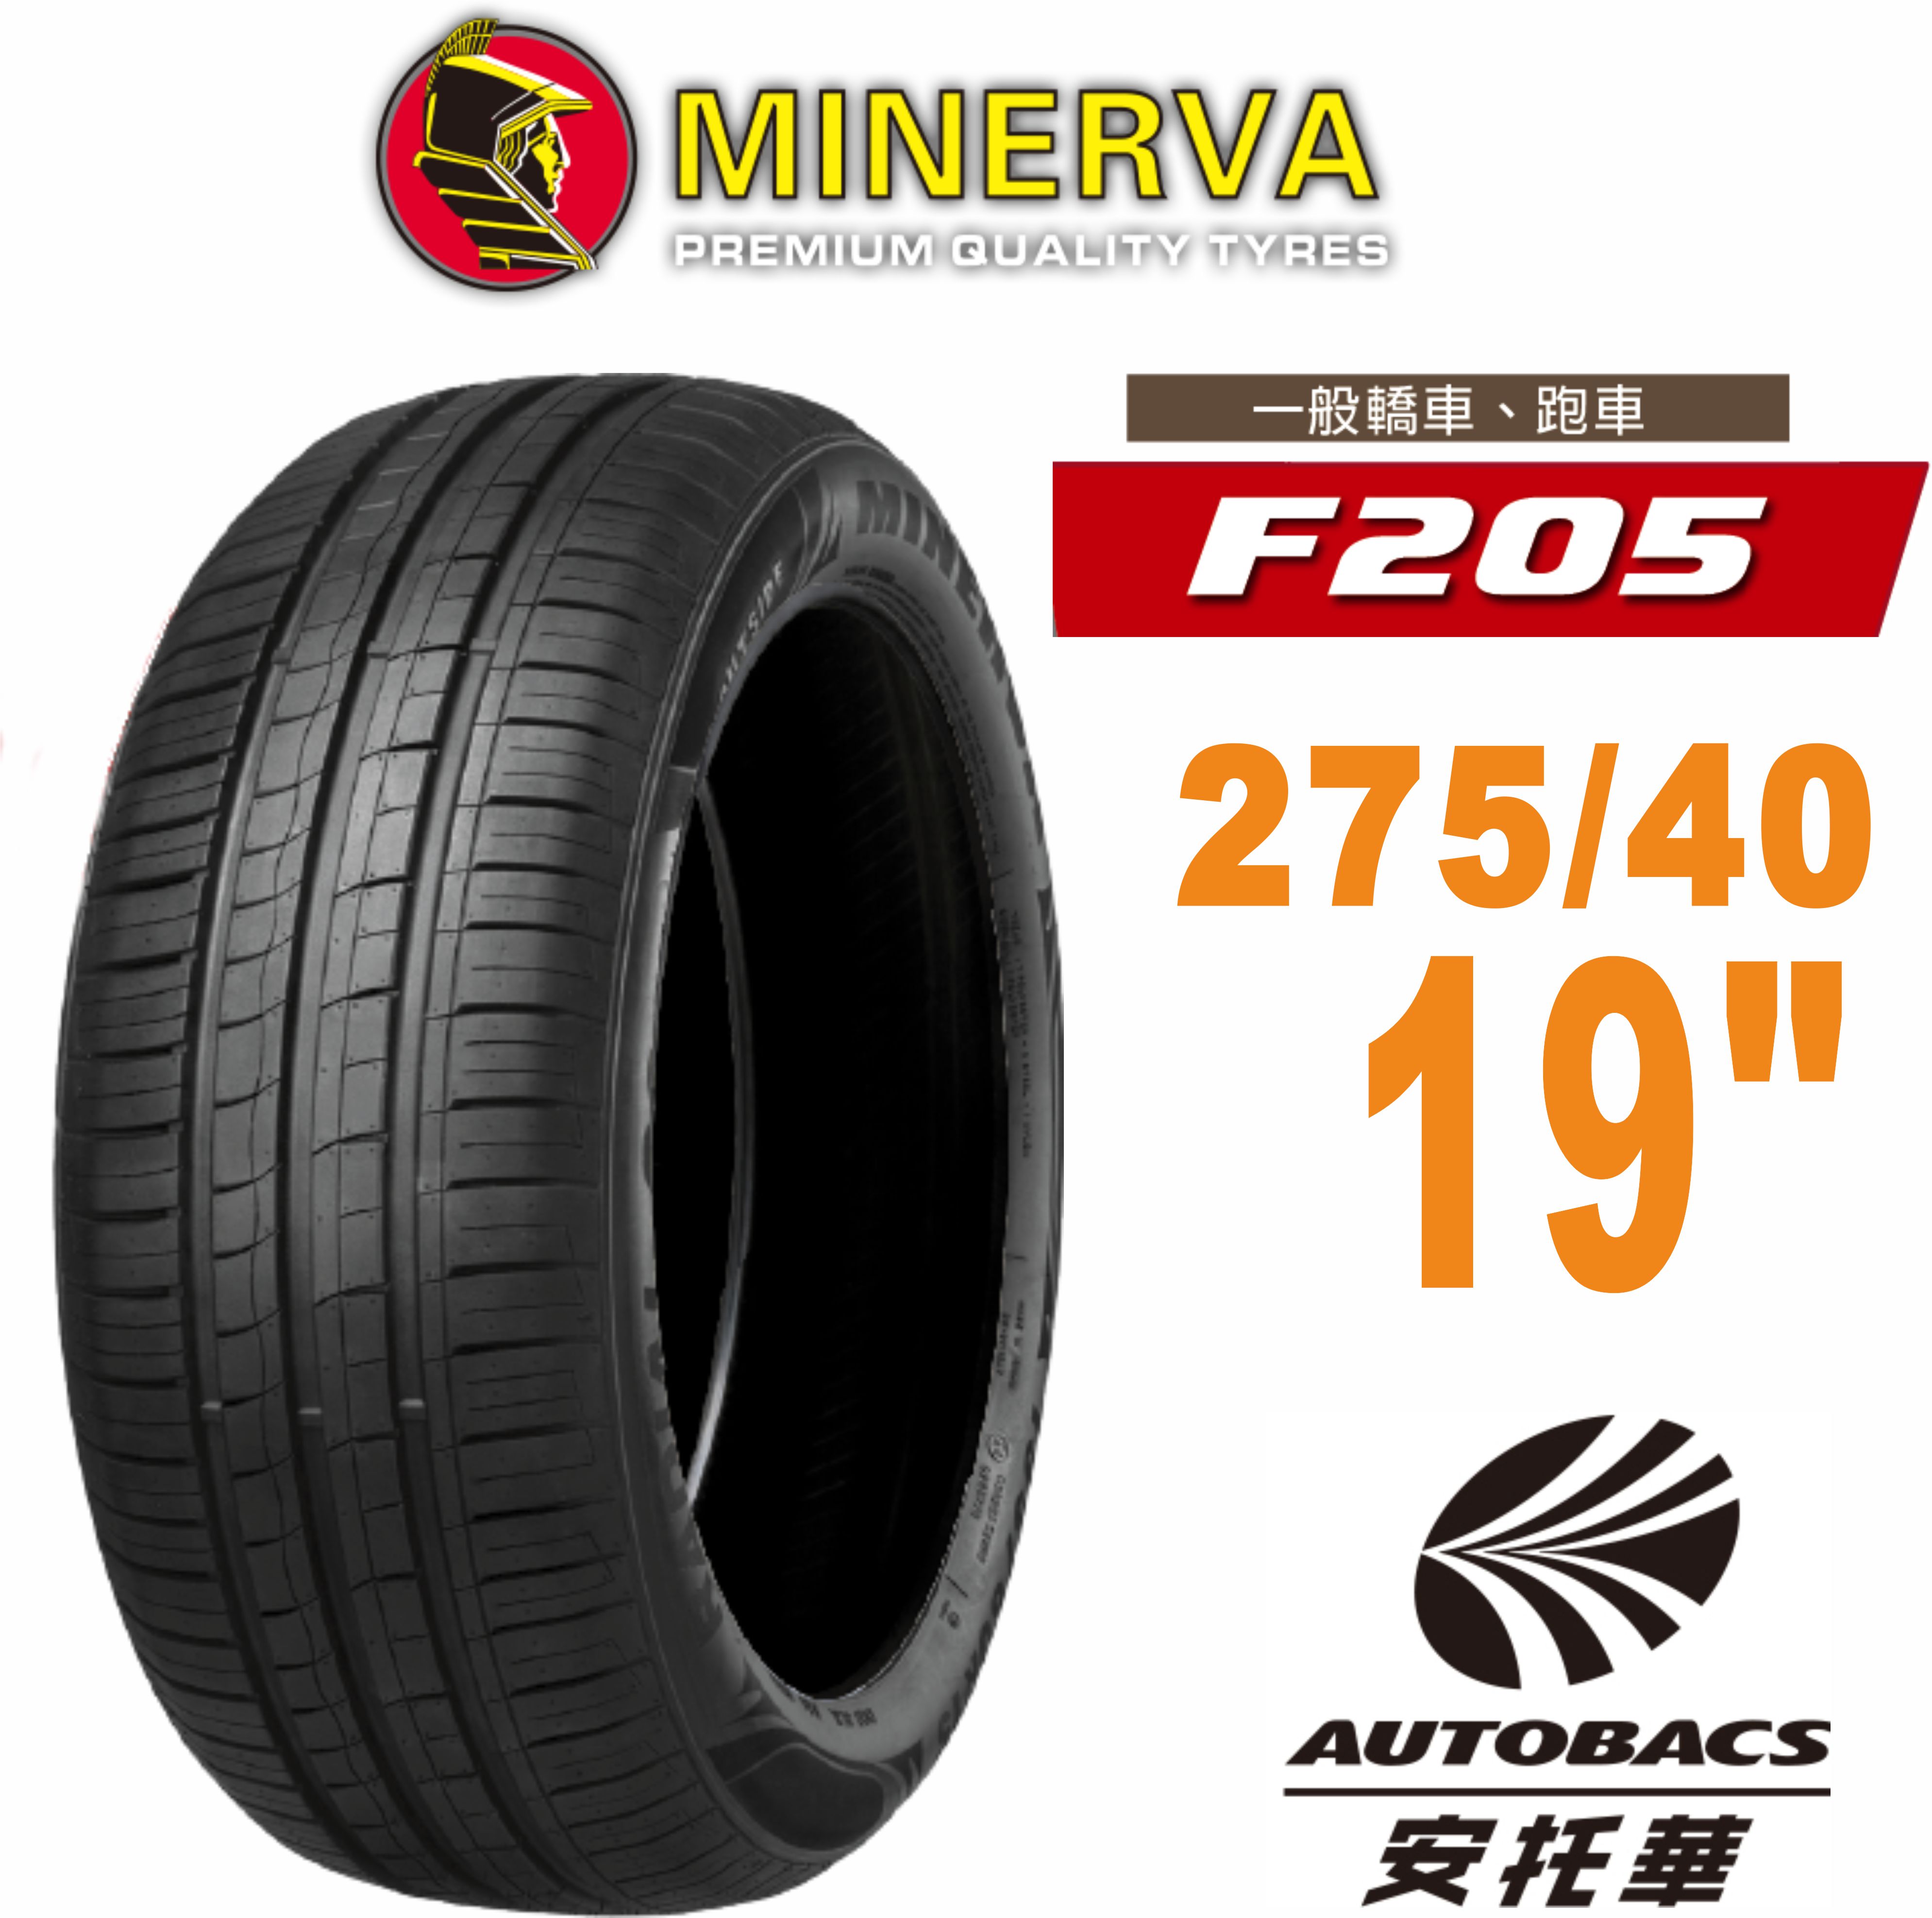 【MINERVA 米納瓦】輪胎 F205-275/40/19 低噪/排水/運動/操控/轎跑車胎一入